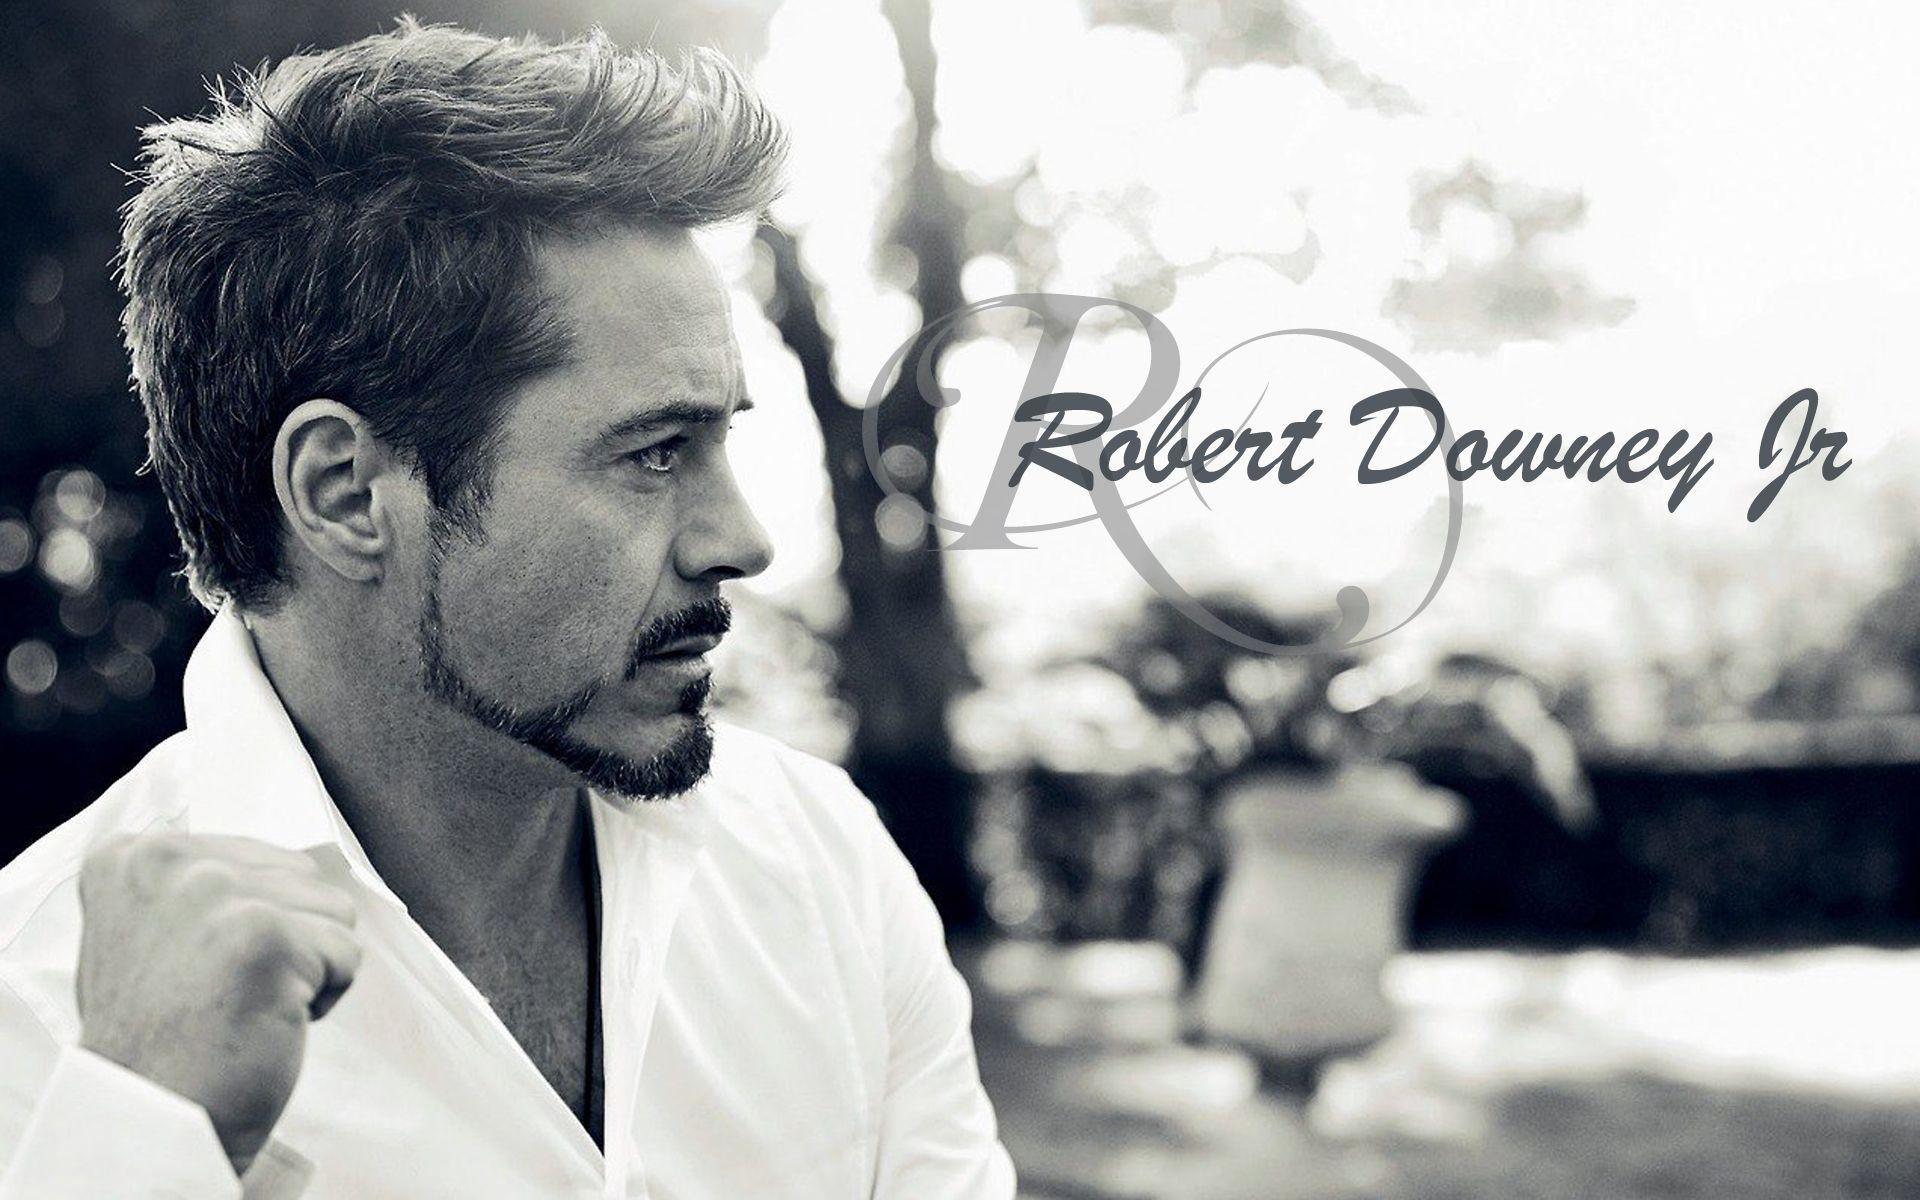 Robert Downey Jr HD Image, Get Free top quality Robert Downey Jr